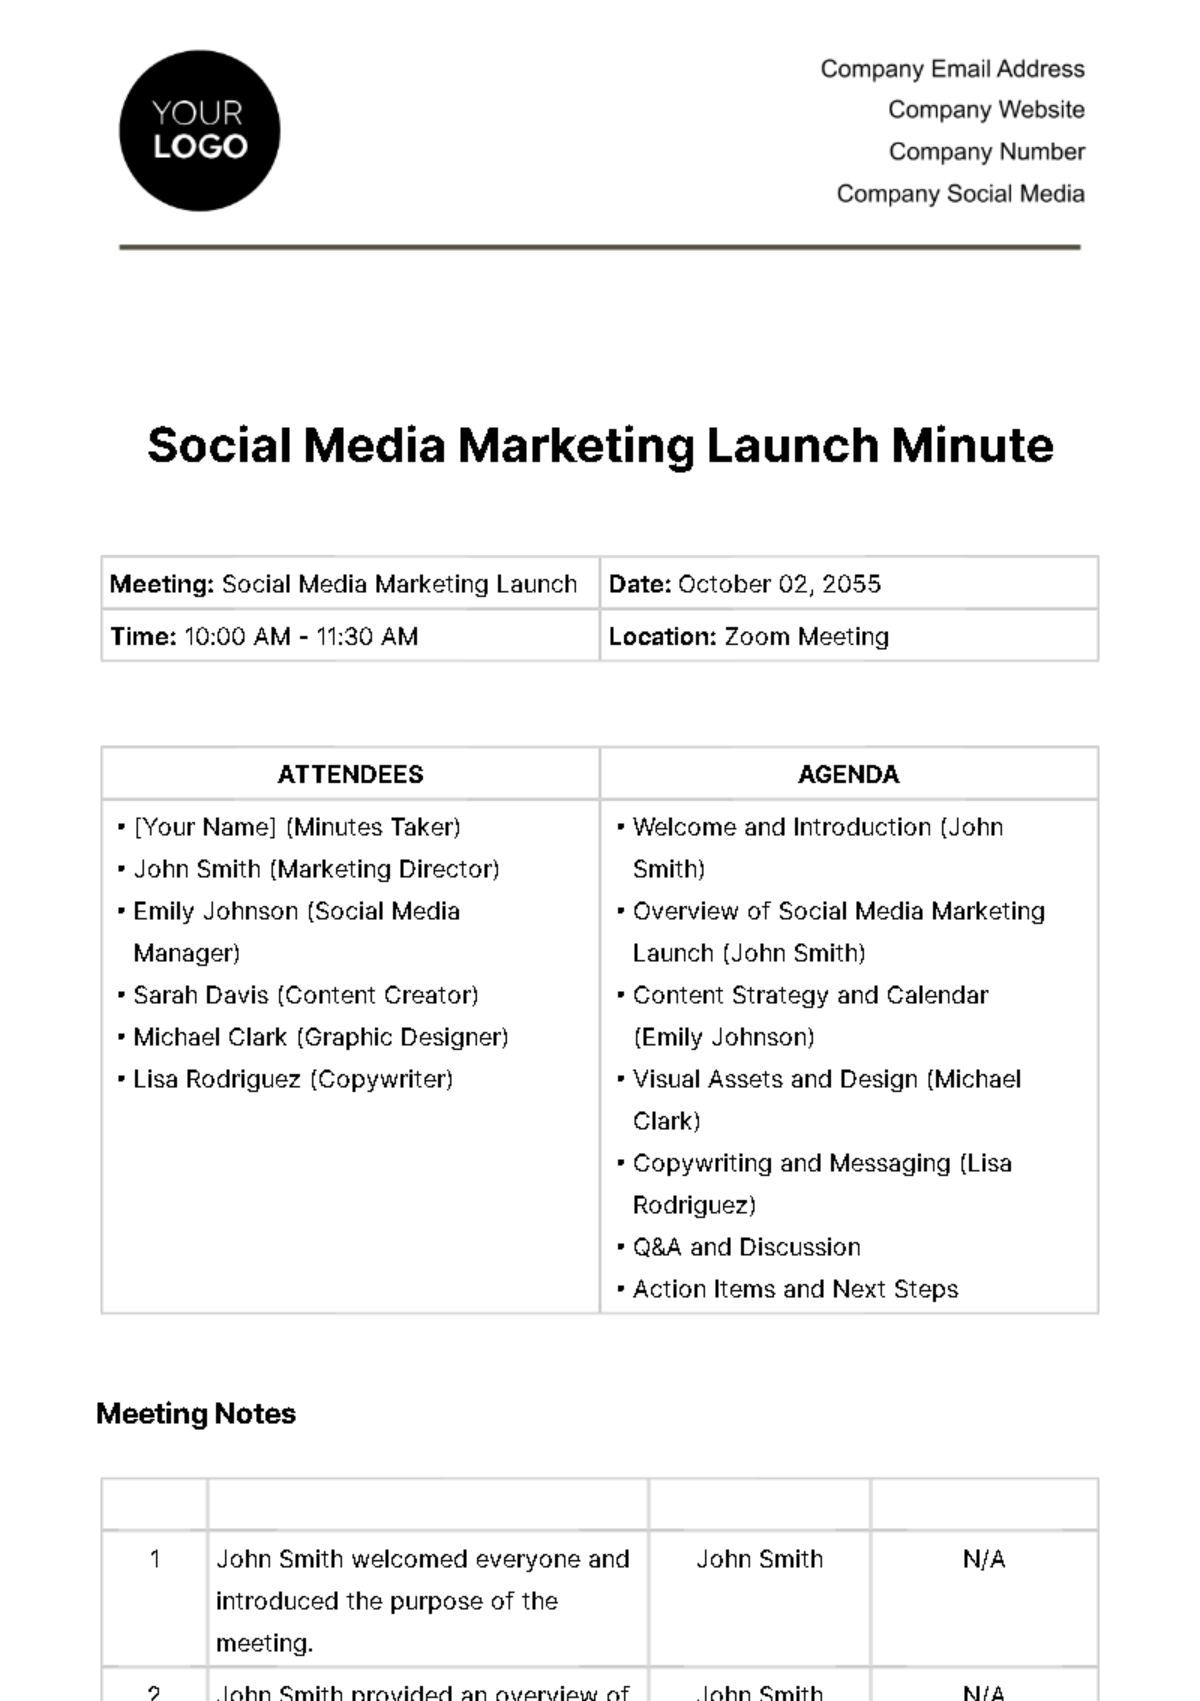 Social Media Marketing Launch Minute Template